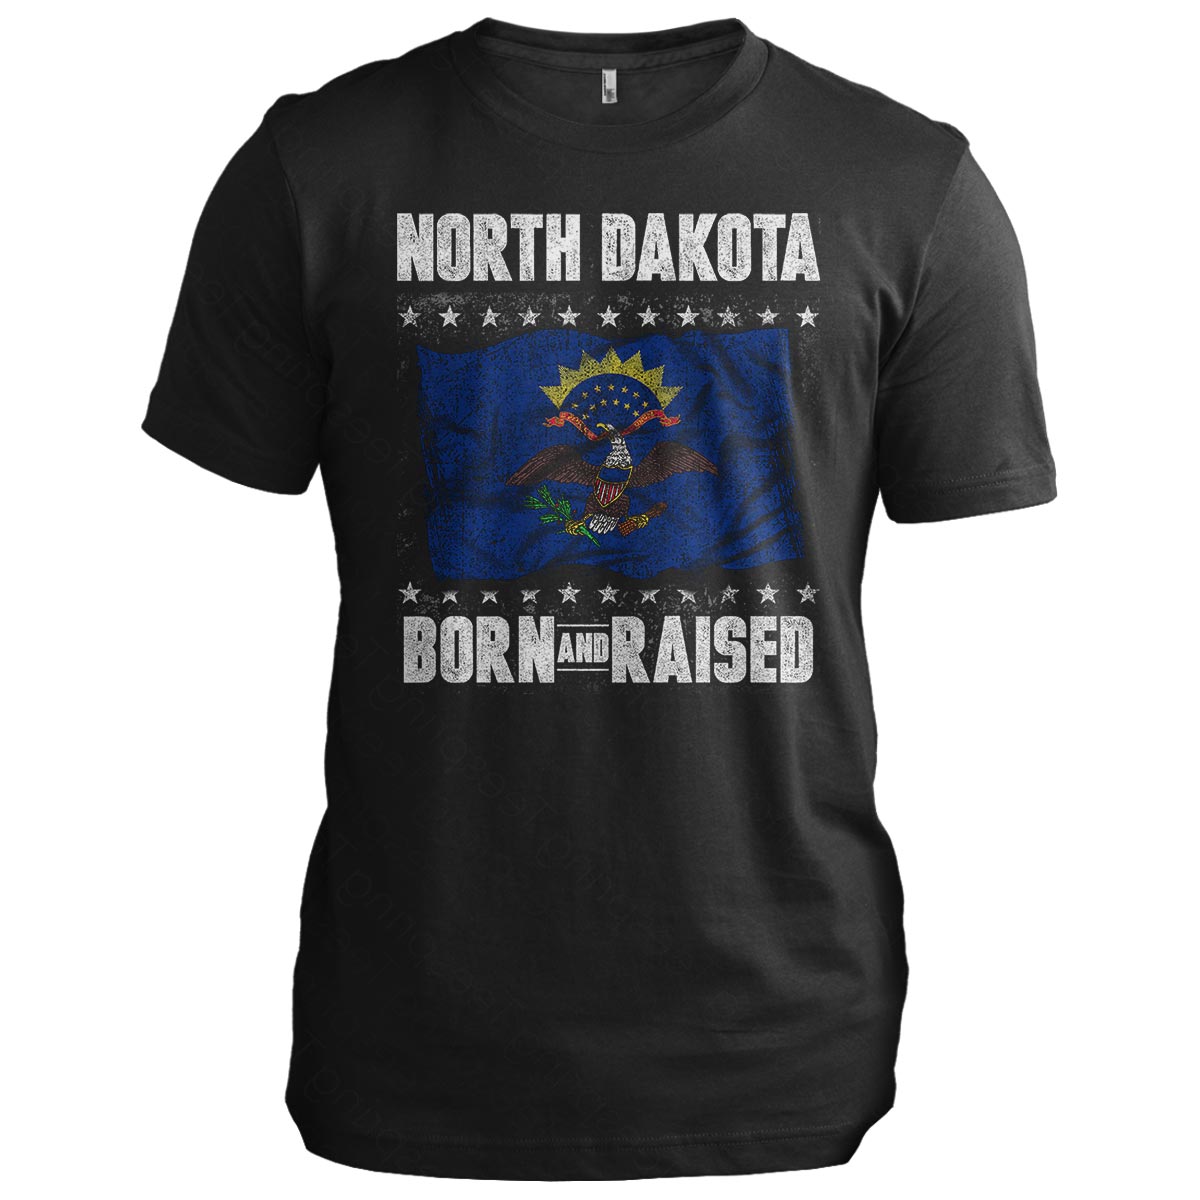 North Dakota: Born and Raised